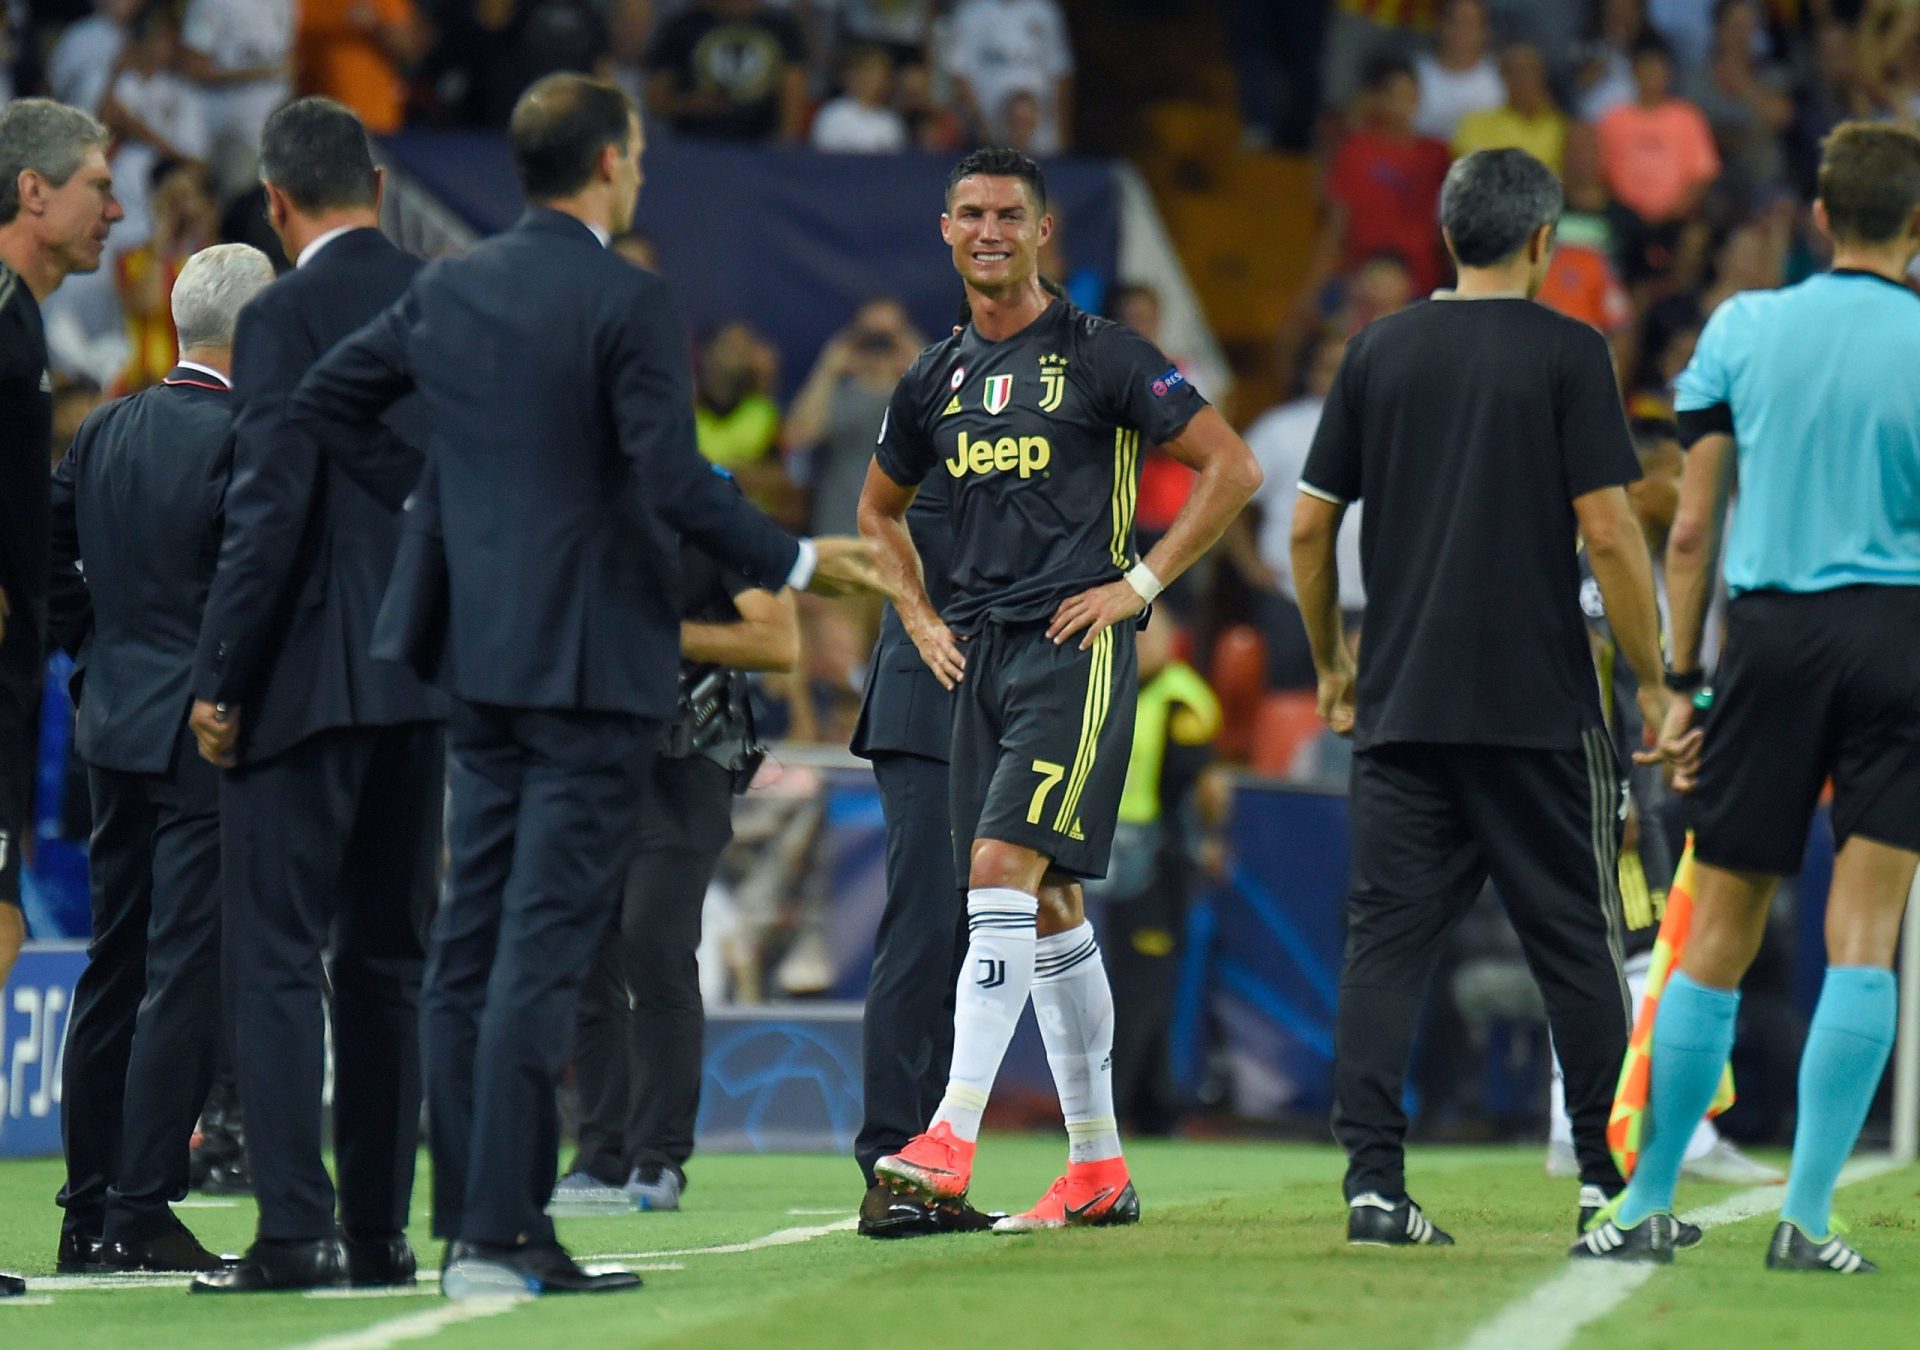 Valencia-Juventus FC. Cristiano Ronaldo expulso